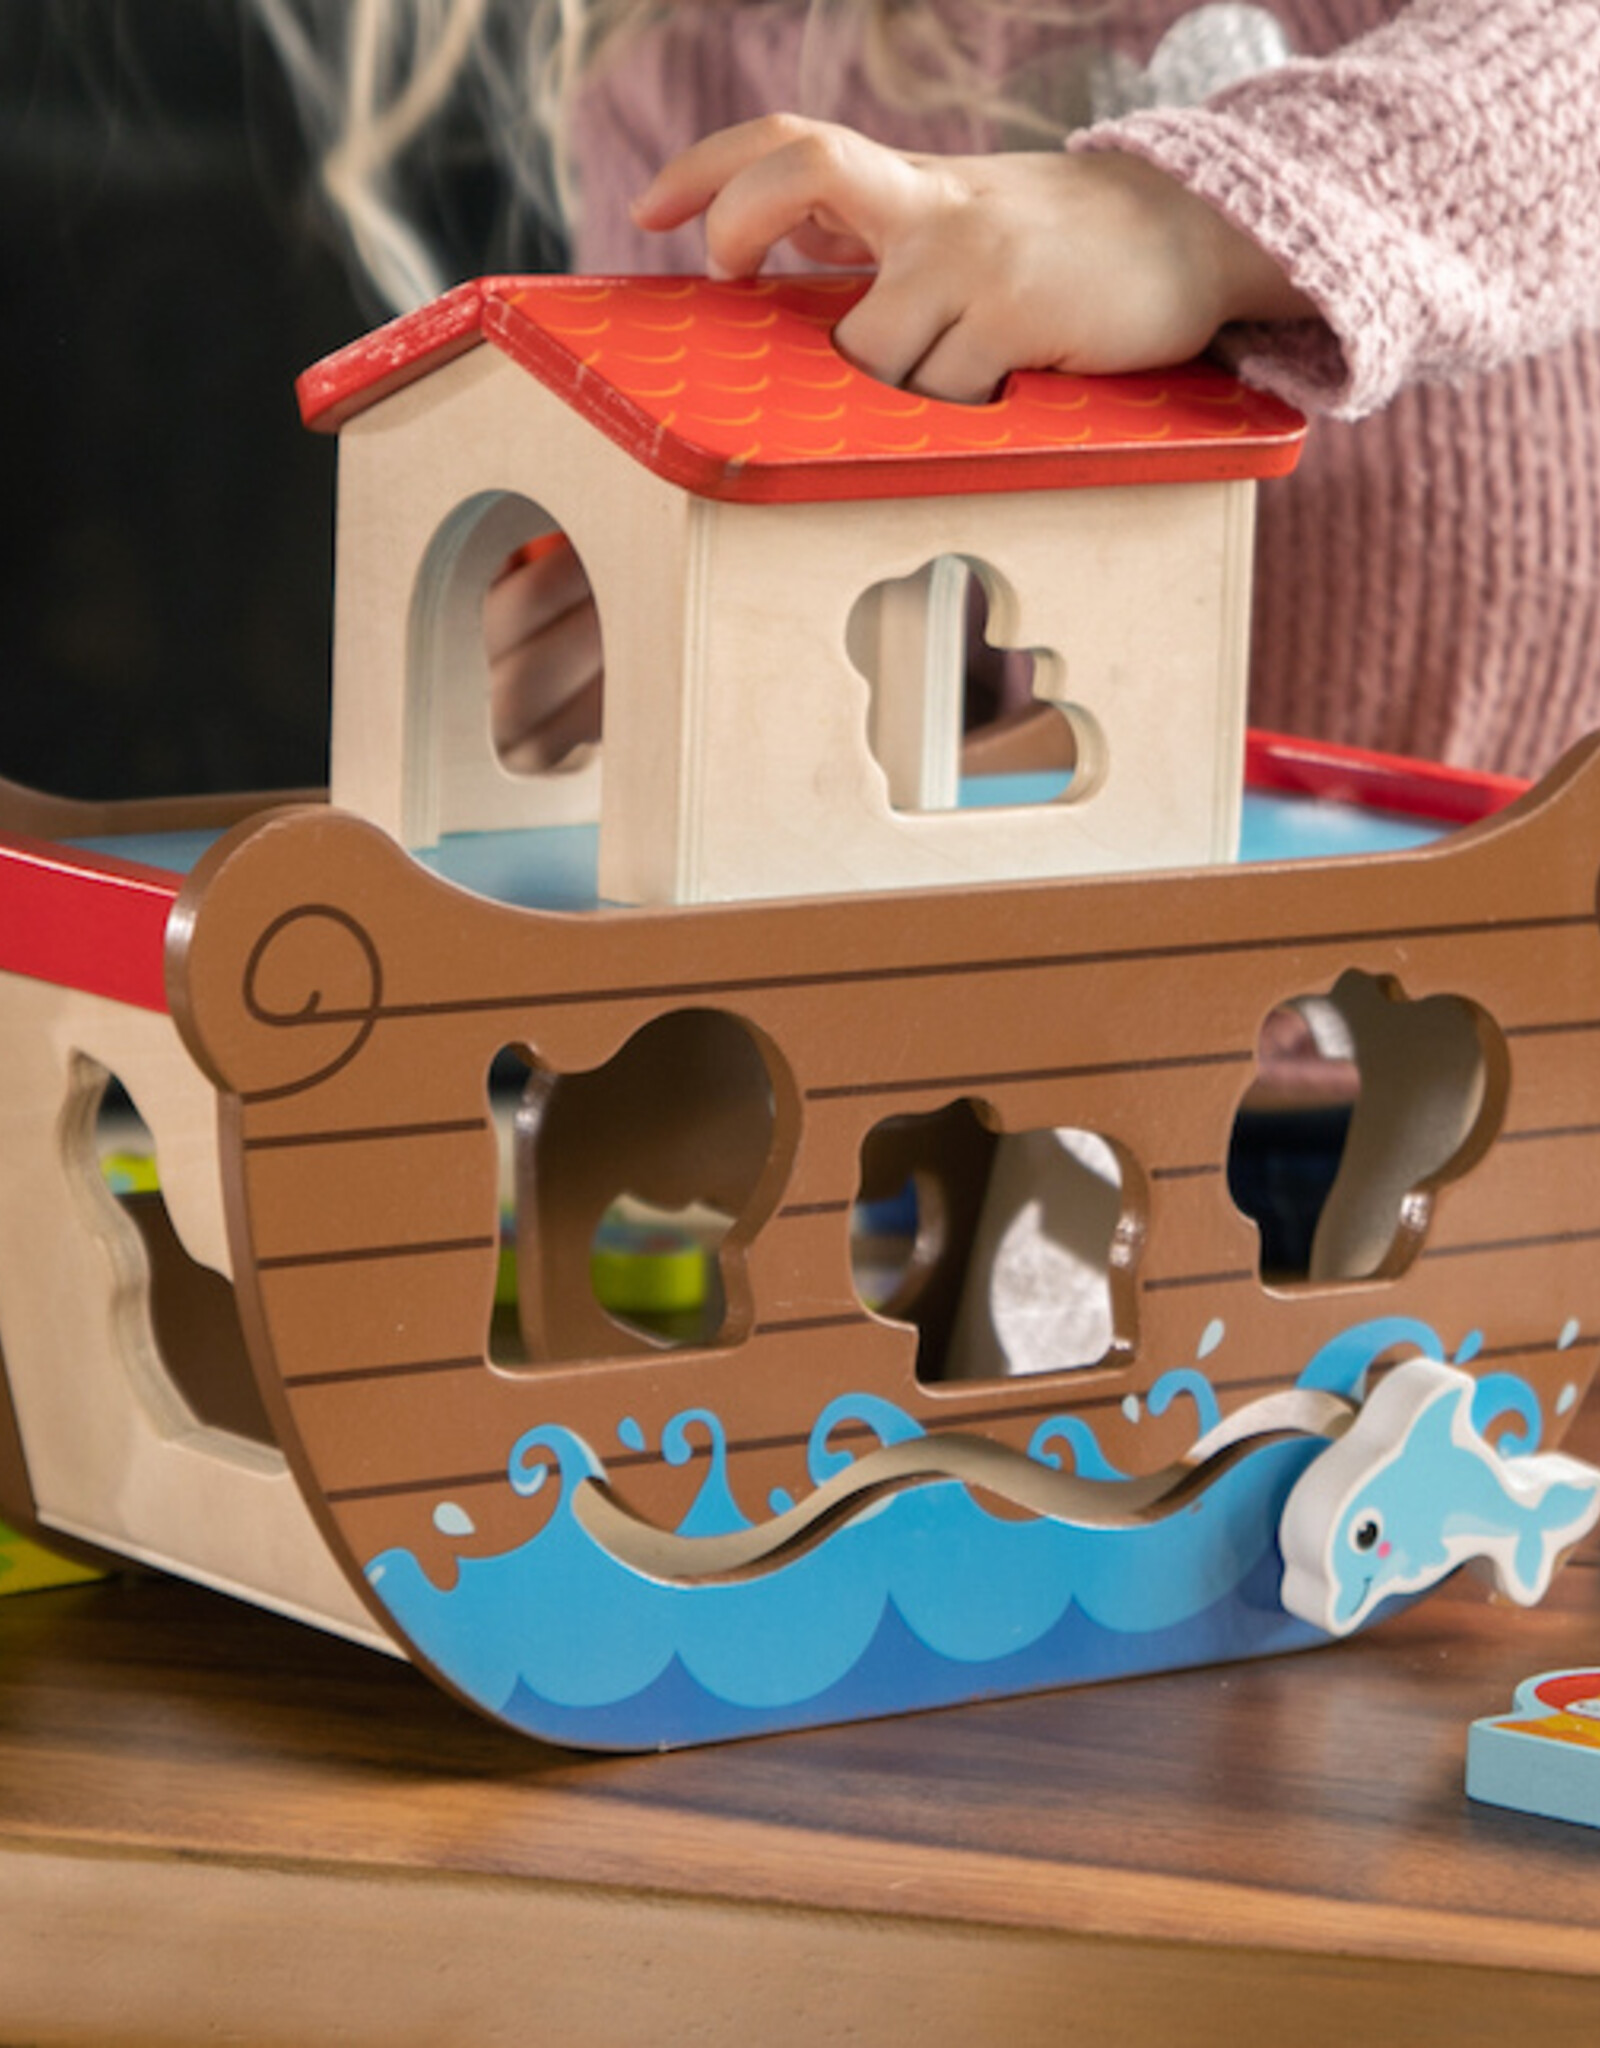 Fat Brain Toy Co Fat Brain Toys - Noah's Ark Sort & Play